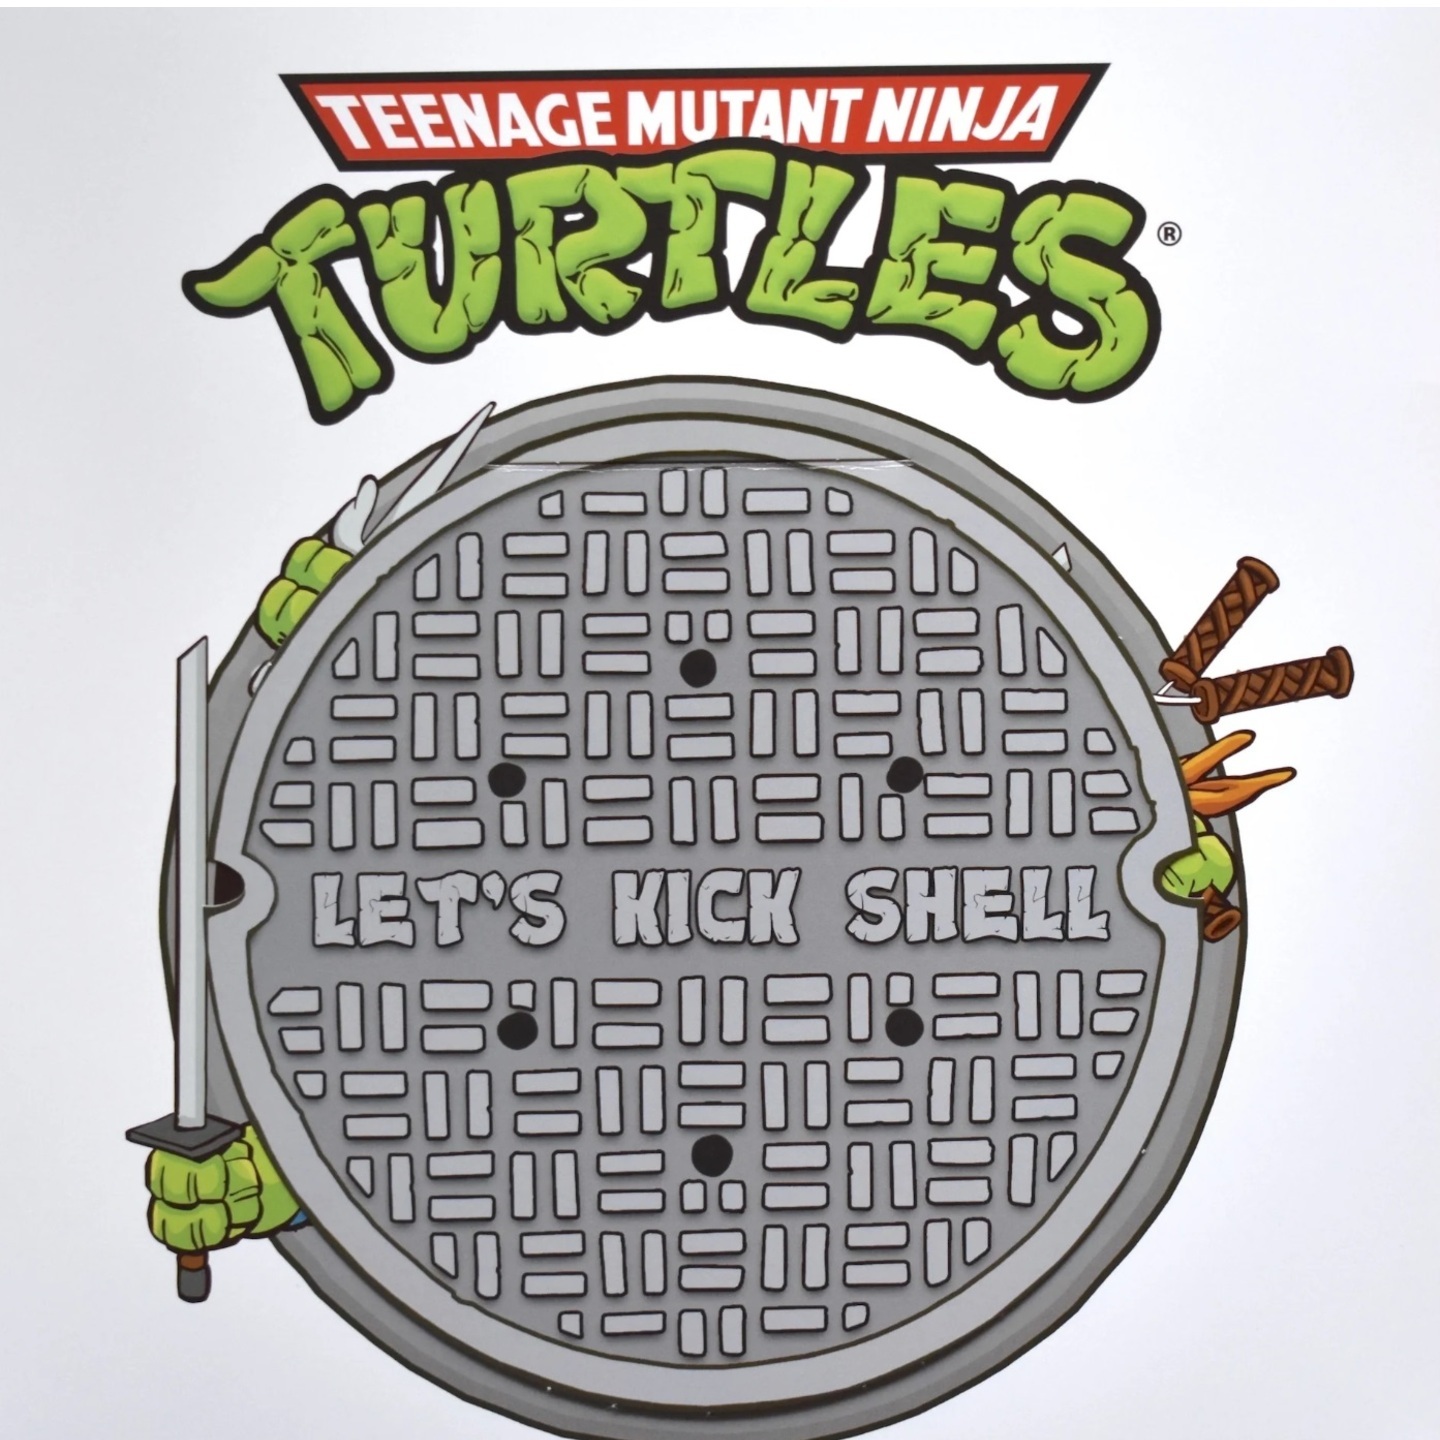 TEENAGE MUTANT NINJA TURTLES - Let's Kick Shell! 12" (Exclusive White Green Swirl Vinyl)